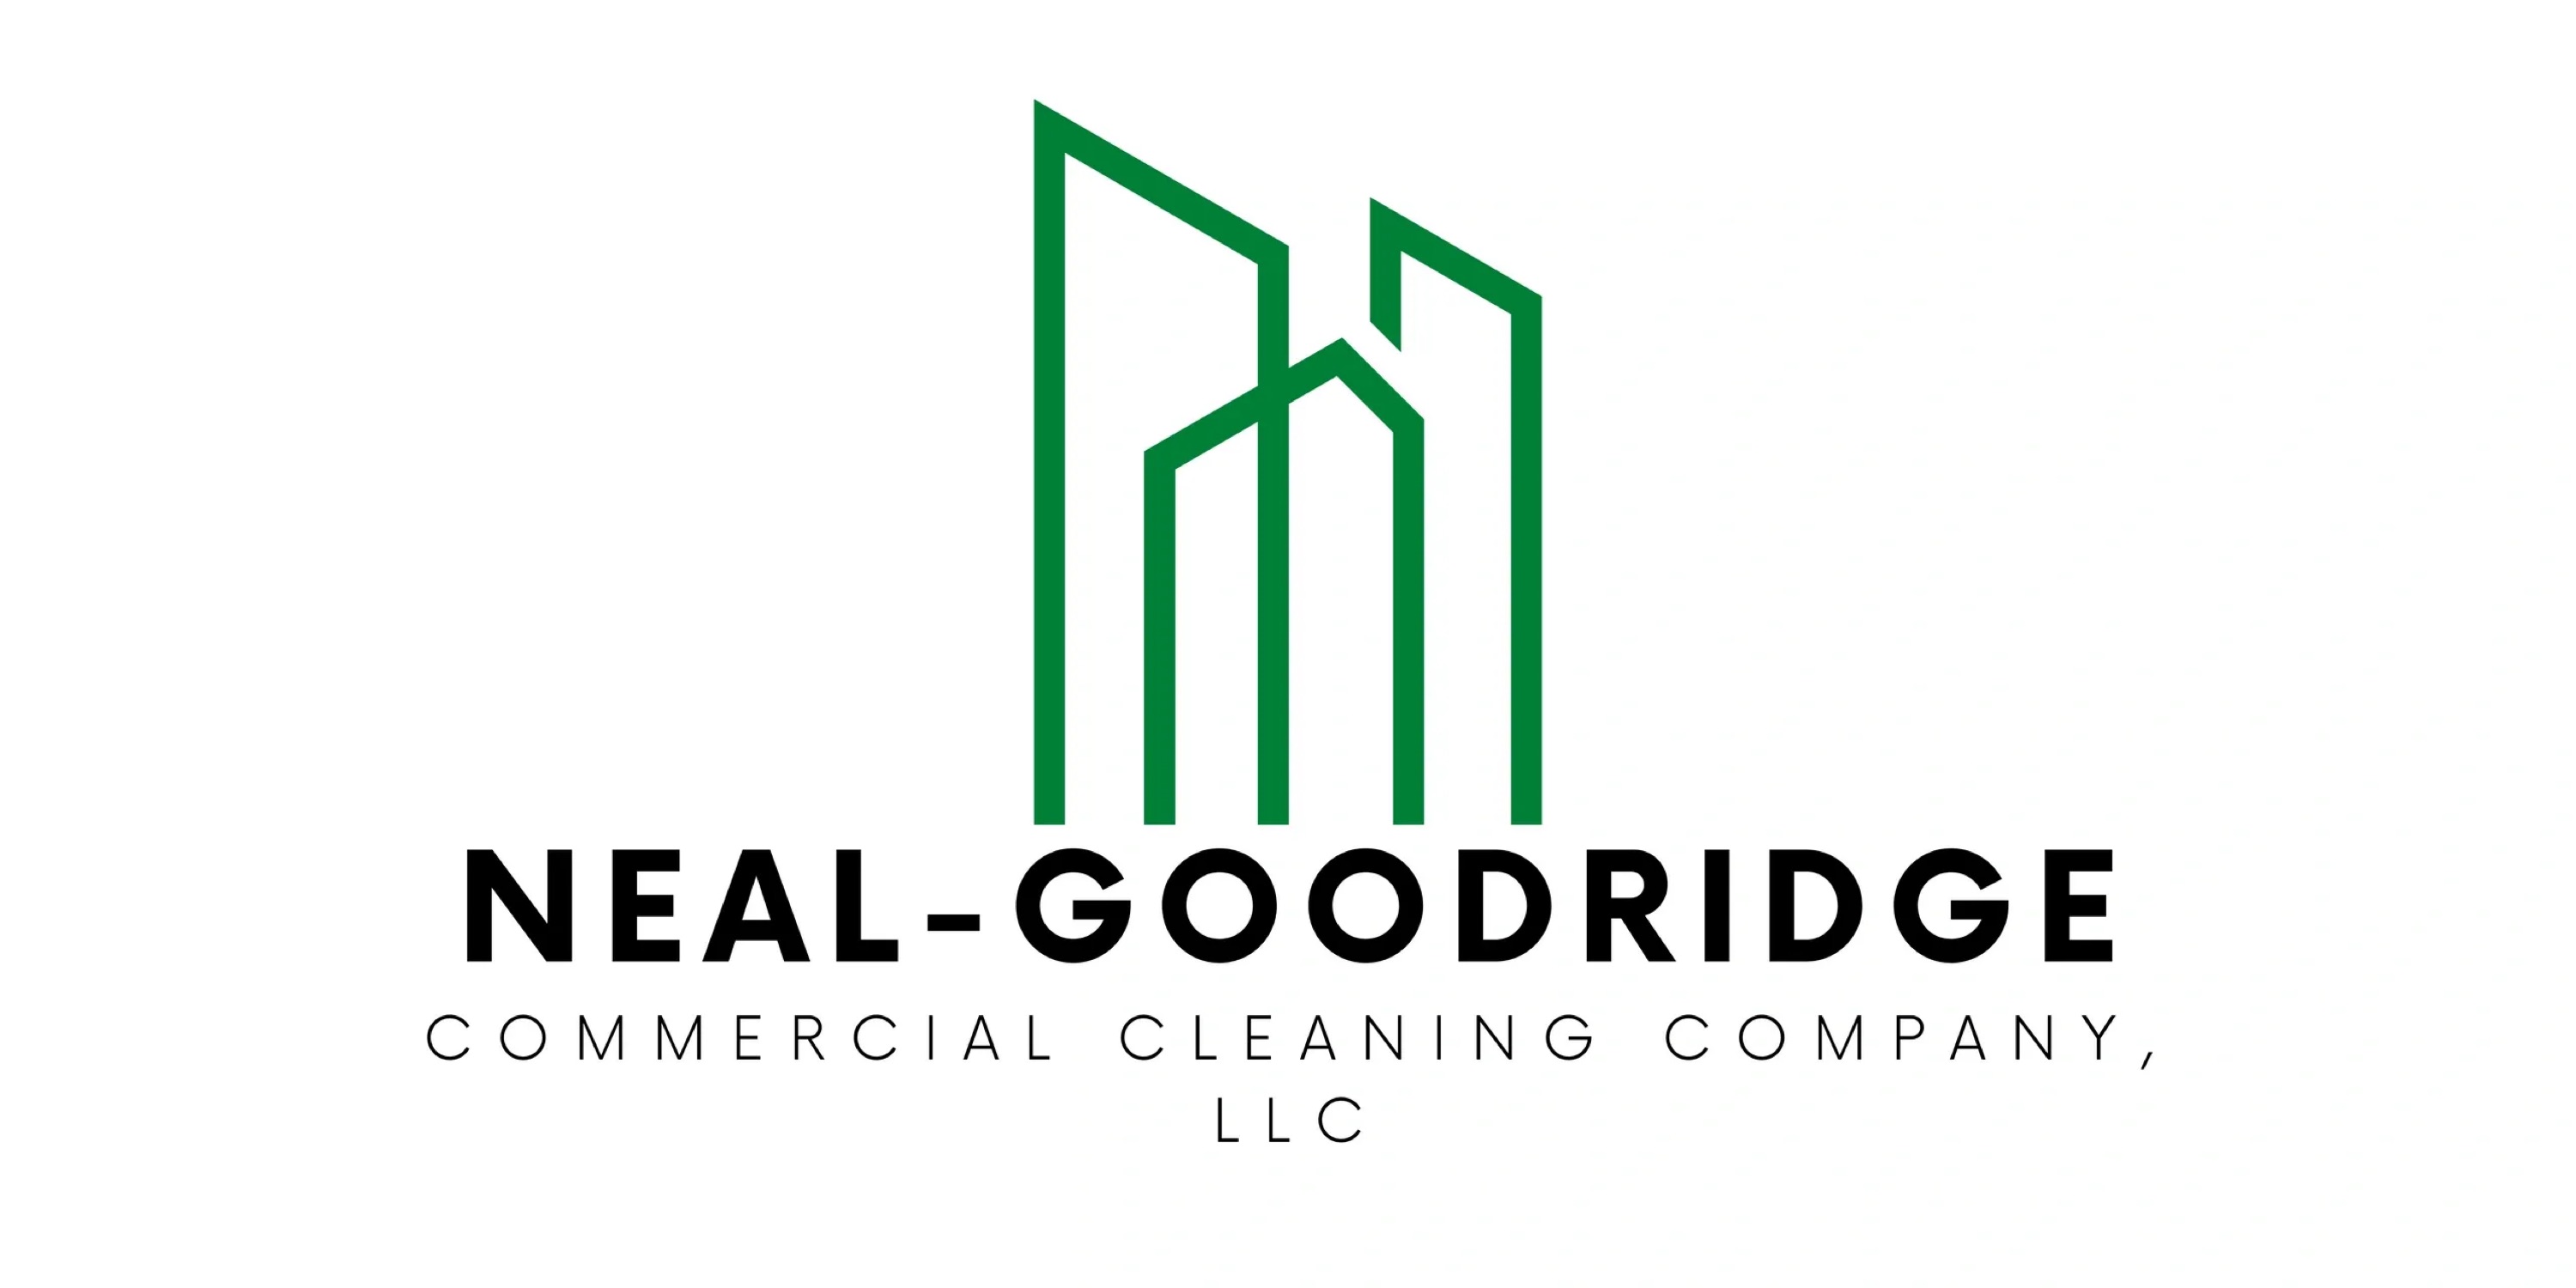 Neal-Goodridge Commercial Cleaning Co. Logo